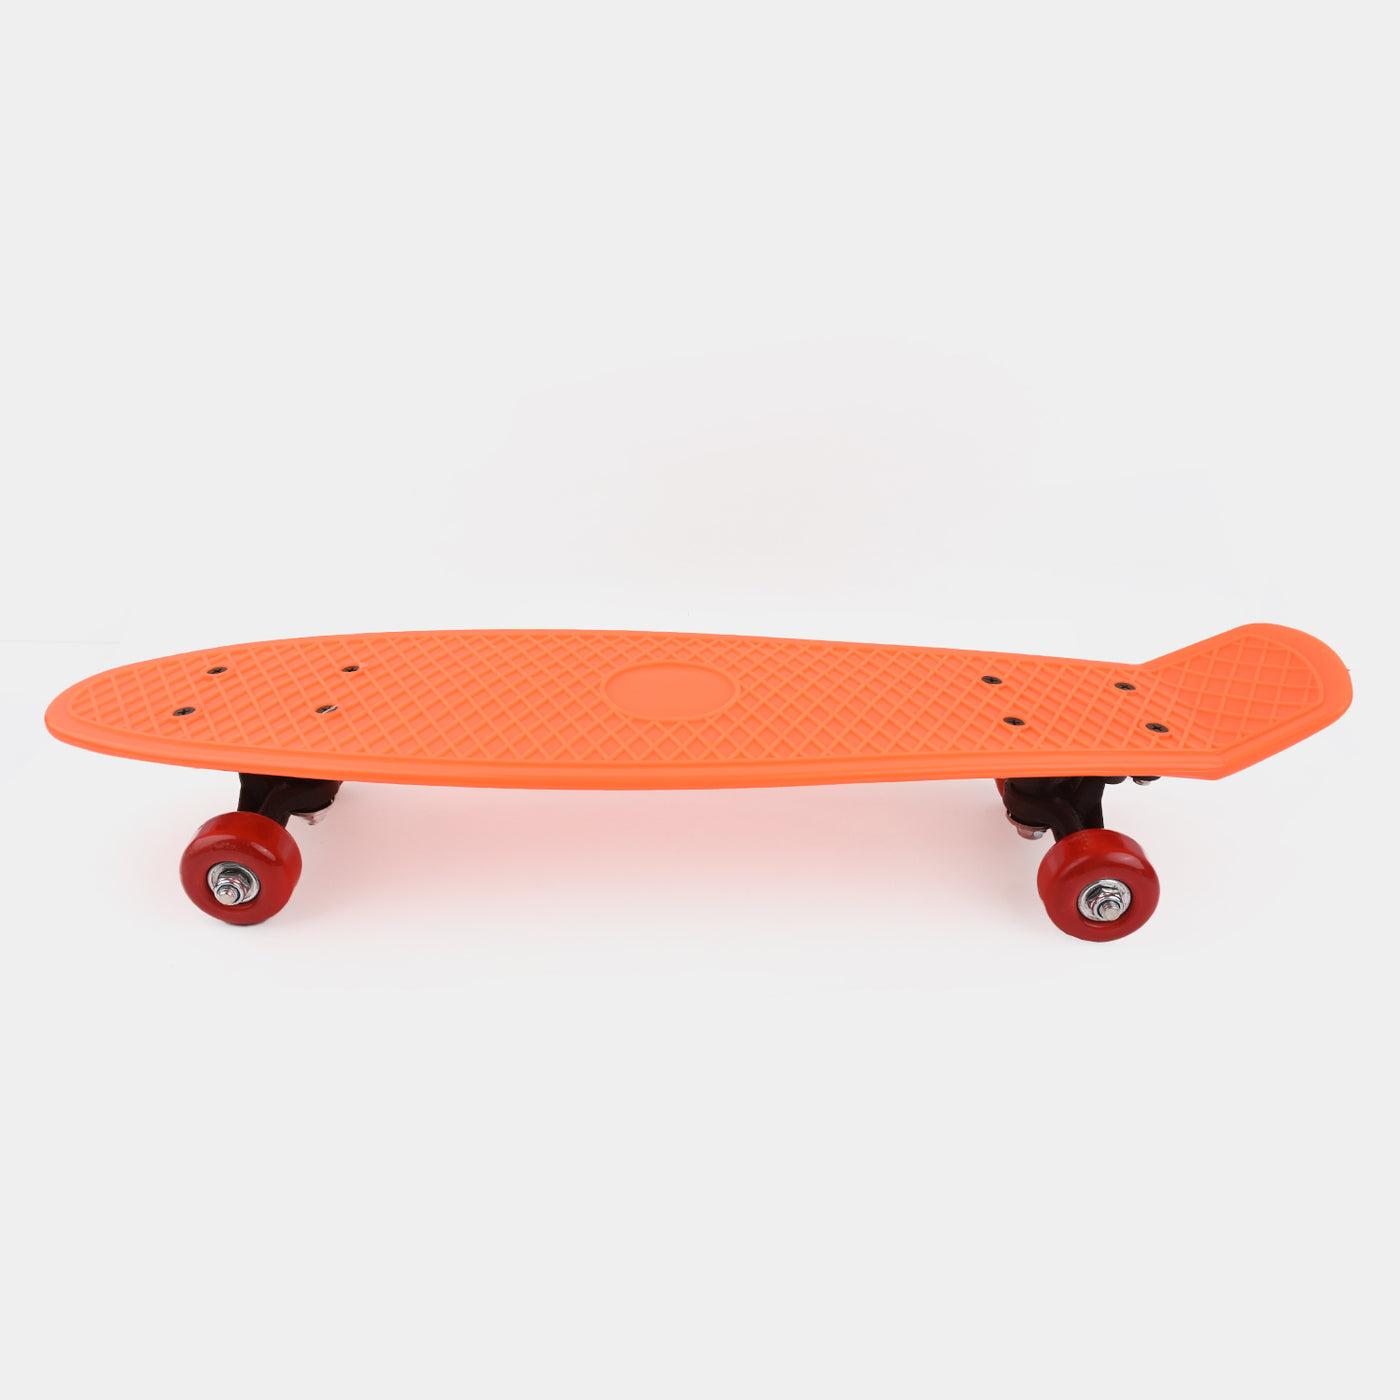 Portable Skate Board Medium For Kids